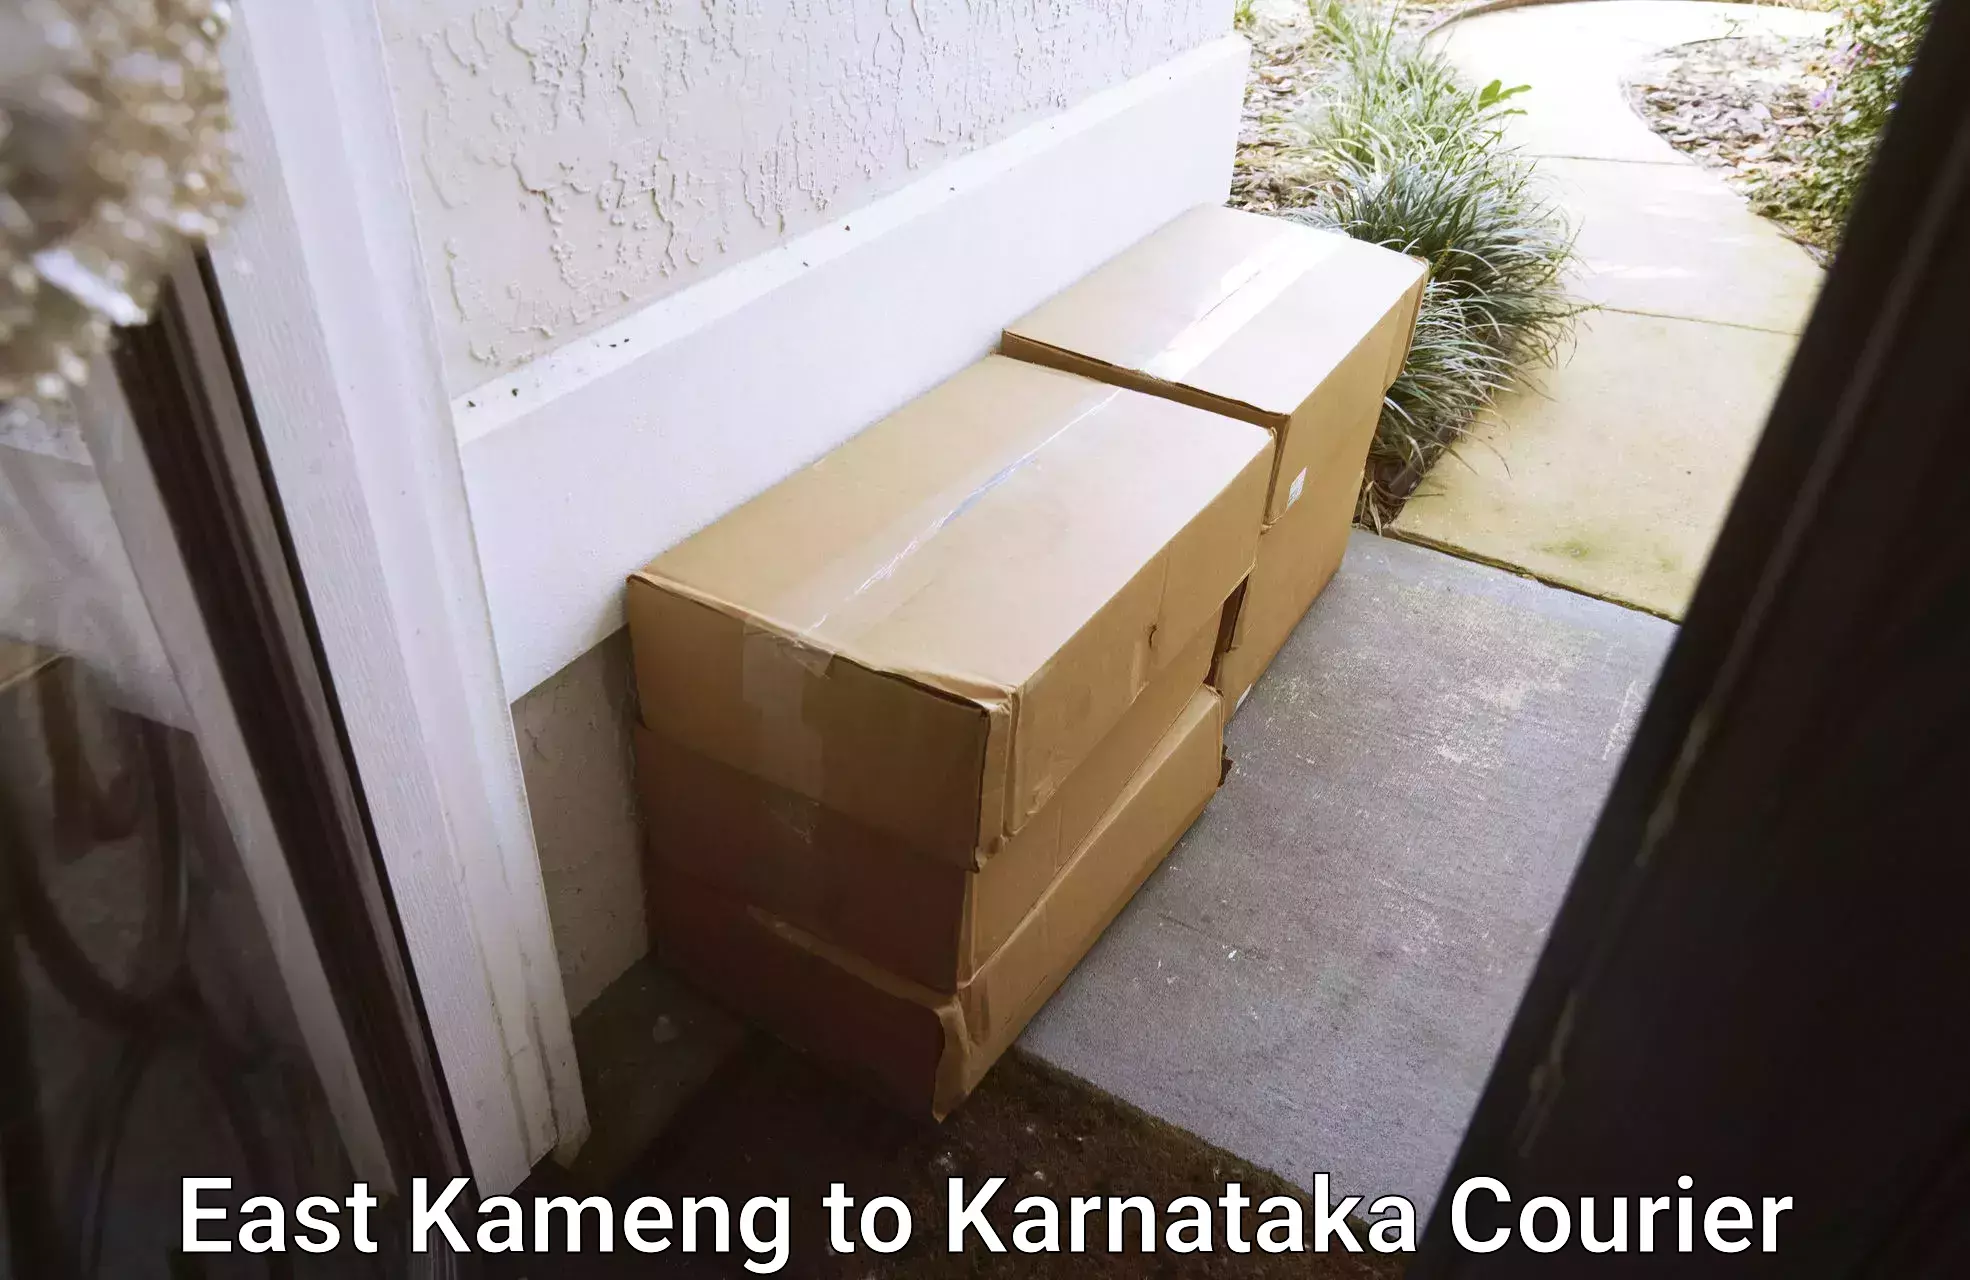 High-capacity parcel service East Kameng to Srirangapatna